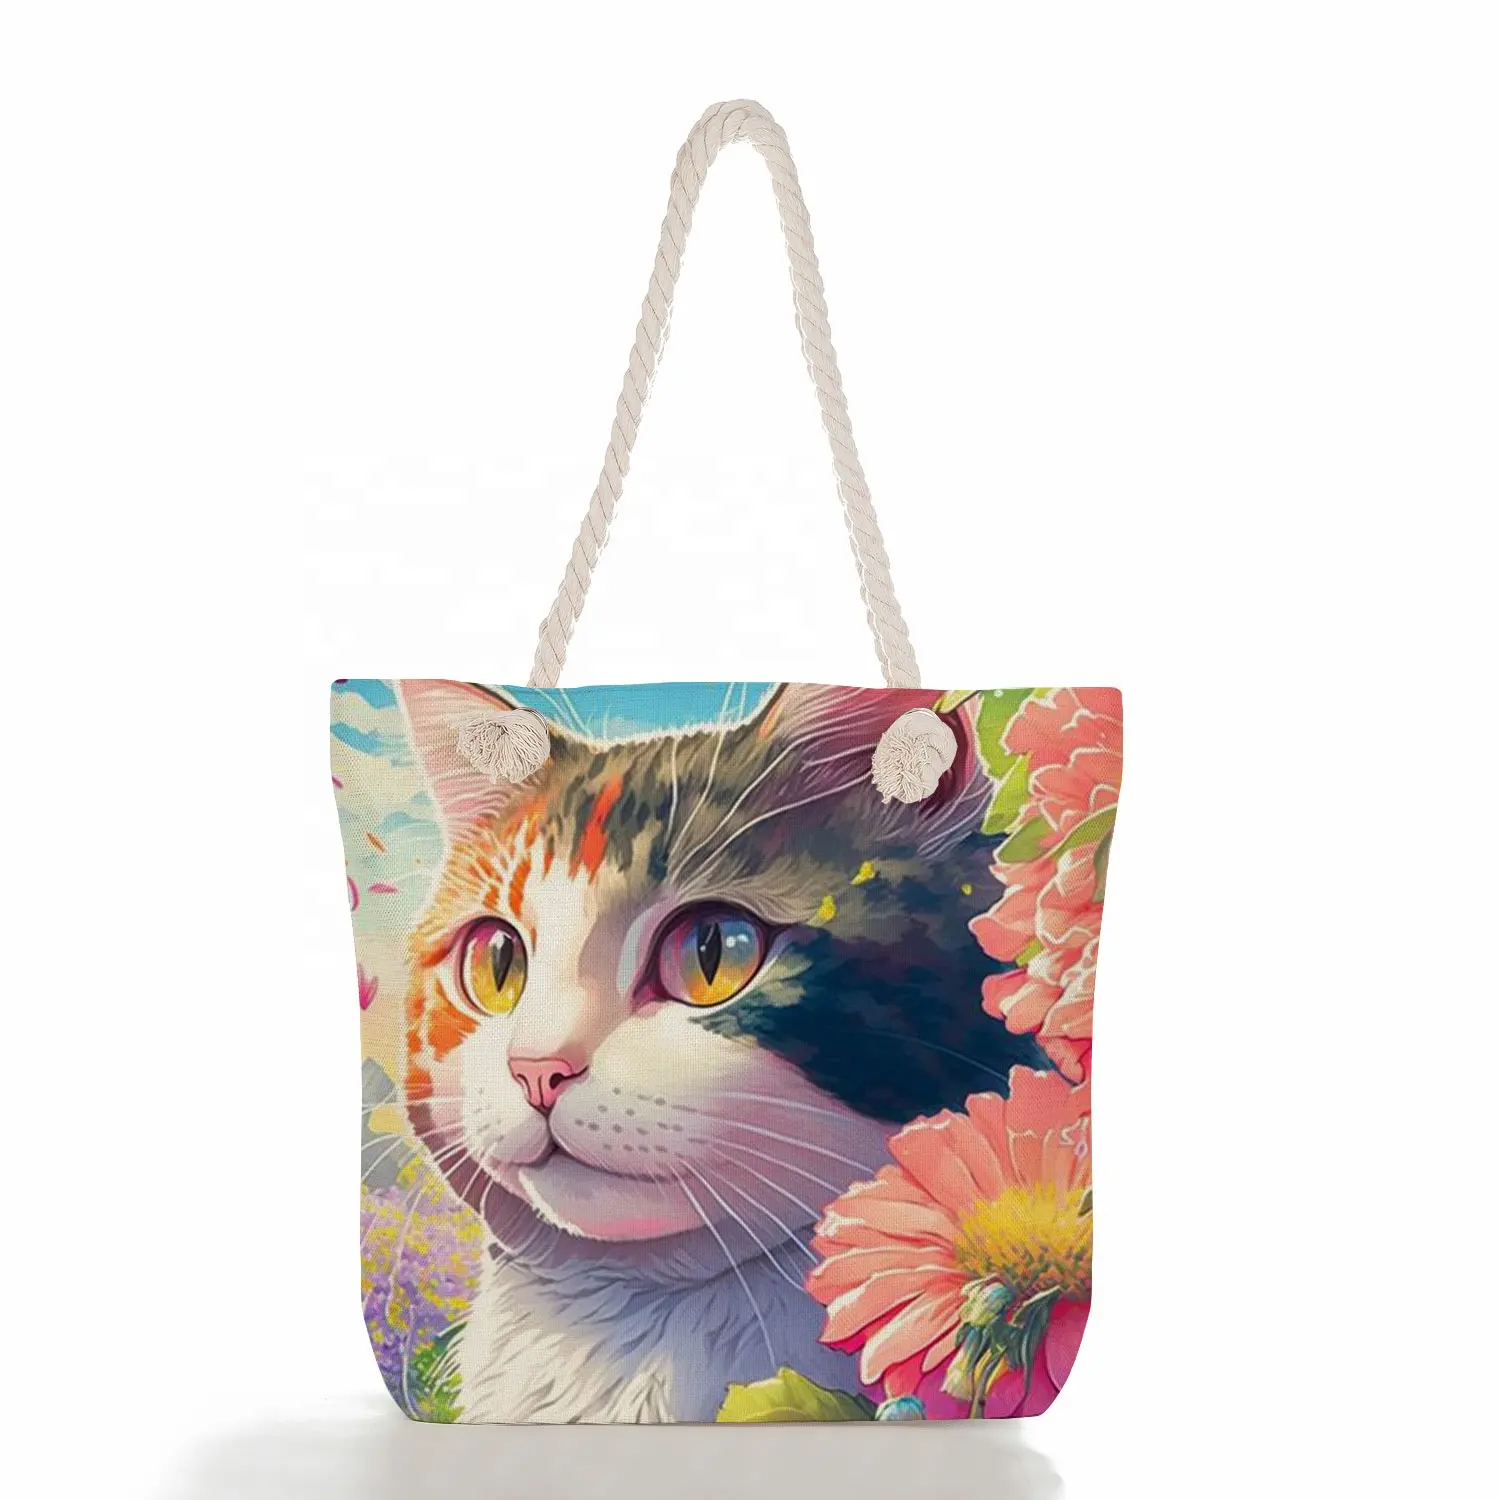 New trend cat print women's fresh leisure art fashion handbag shoulder tote bag